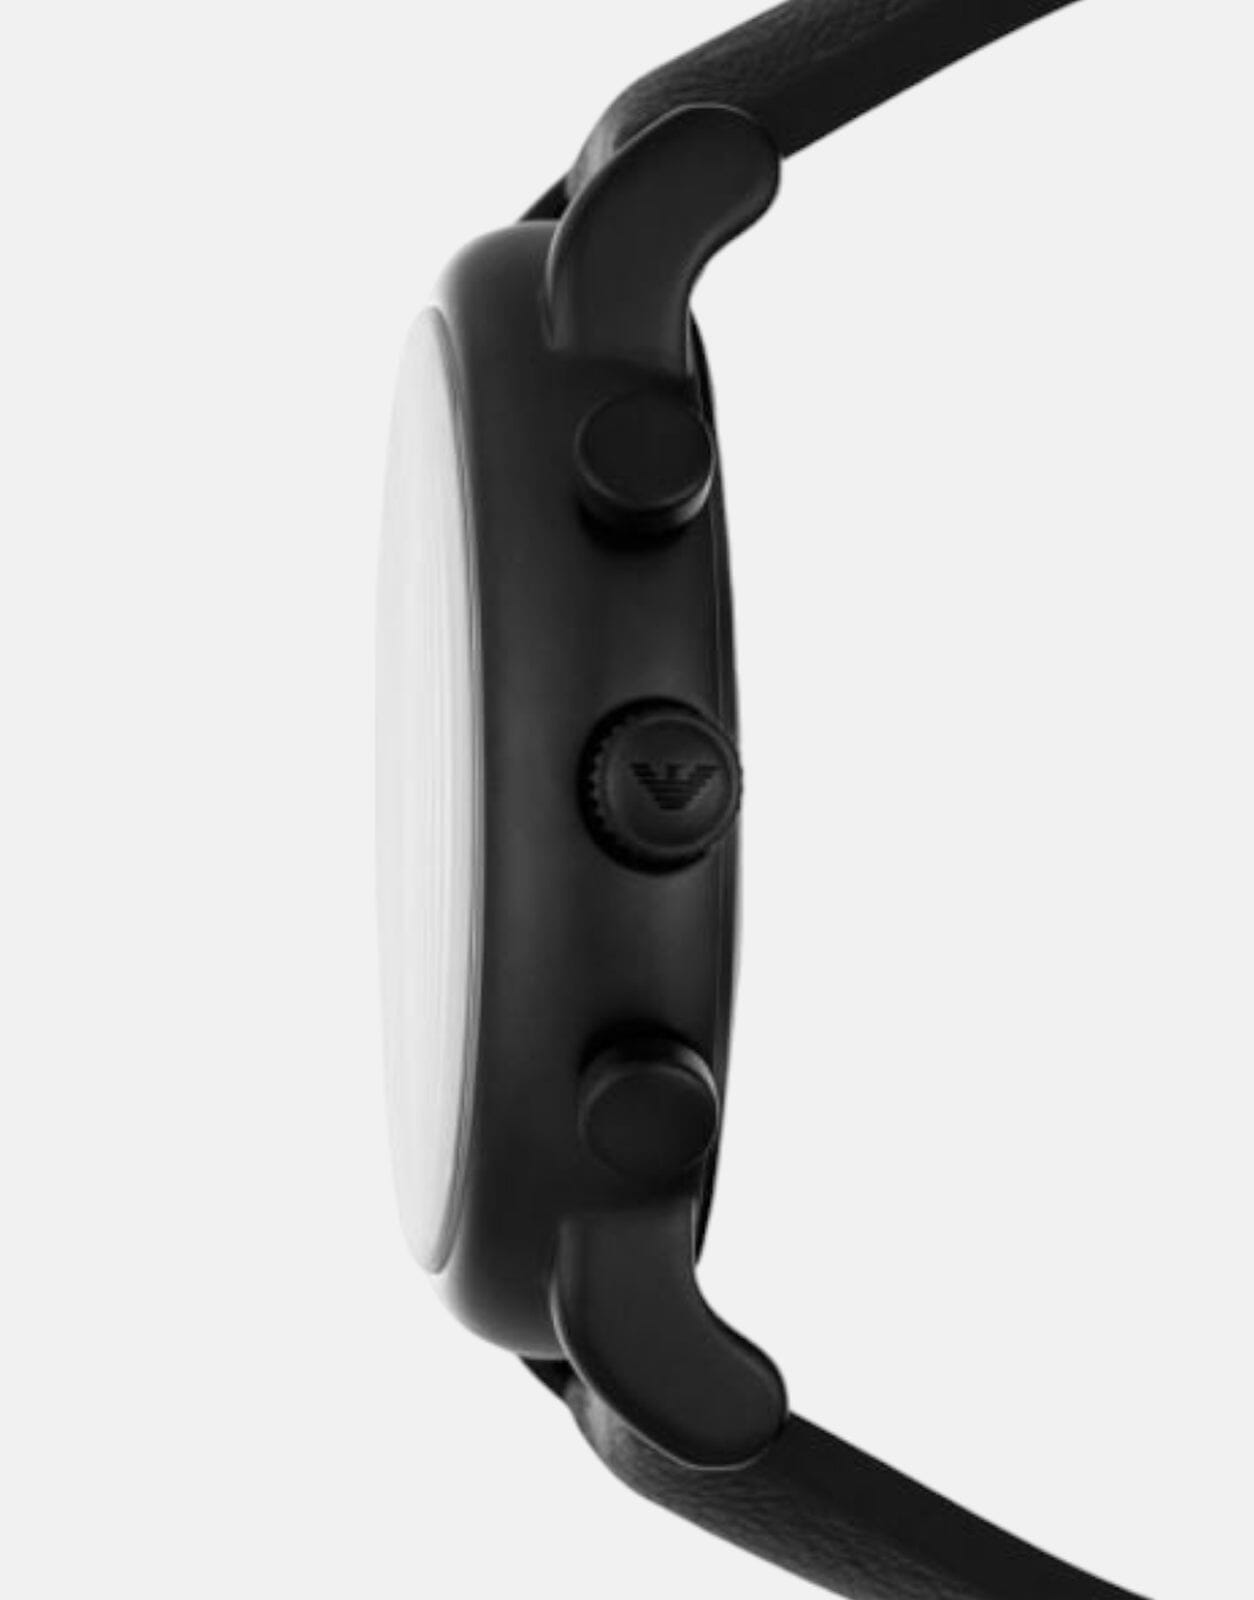 Armani Exchange Luigi Dress Black Leather Watch - Subwear